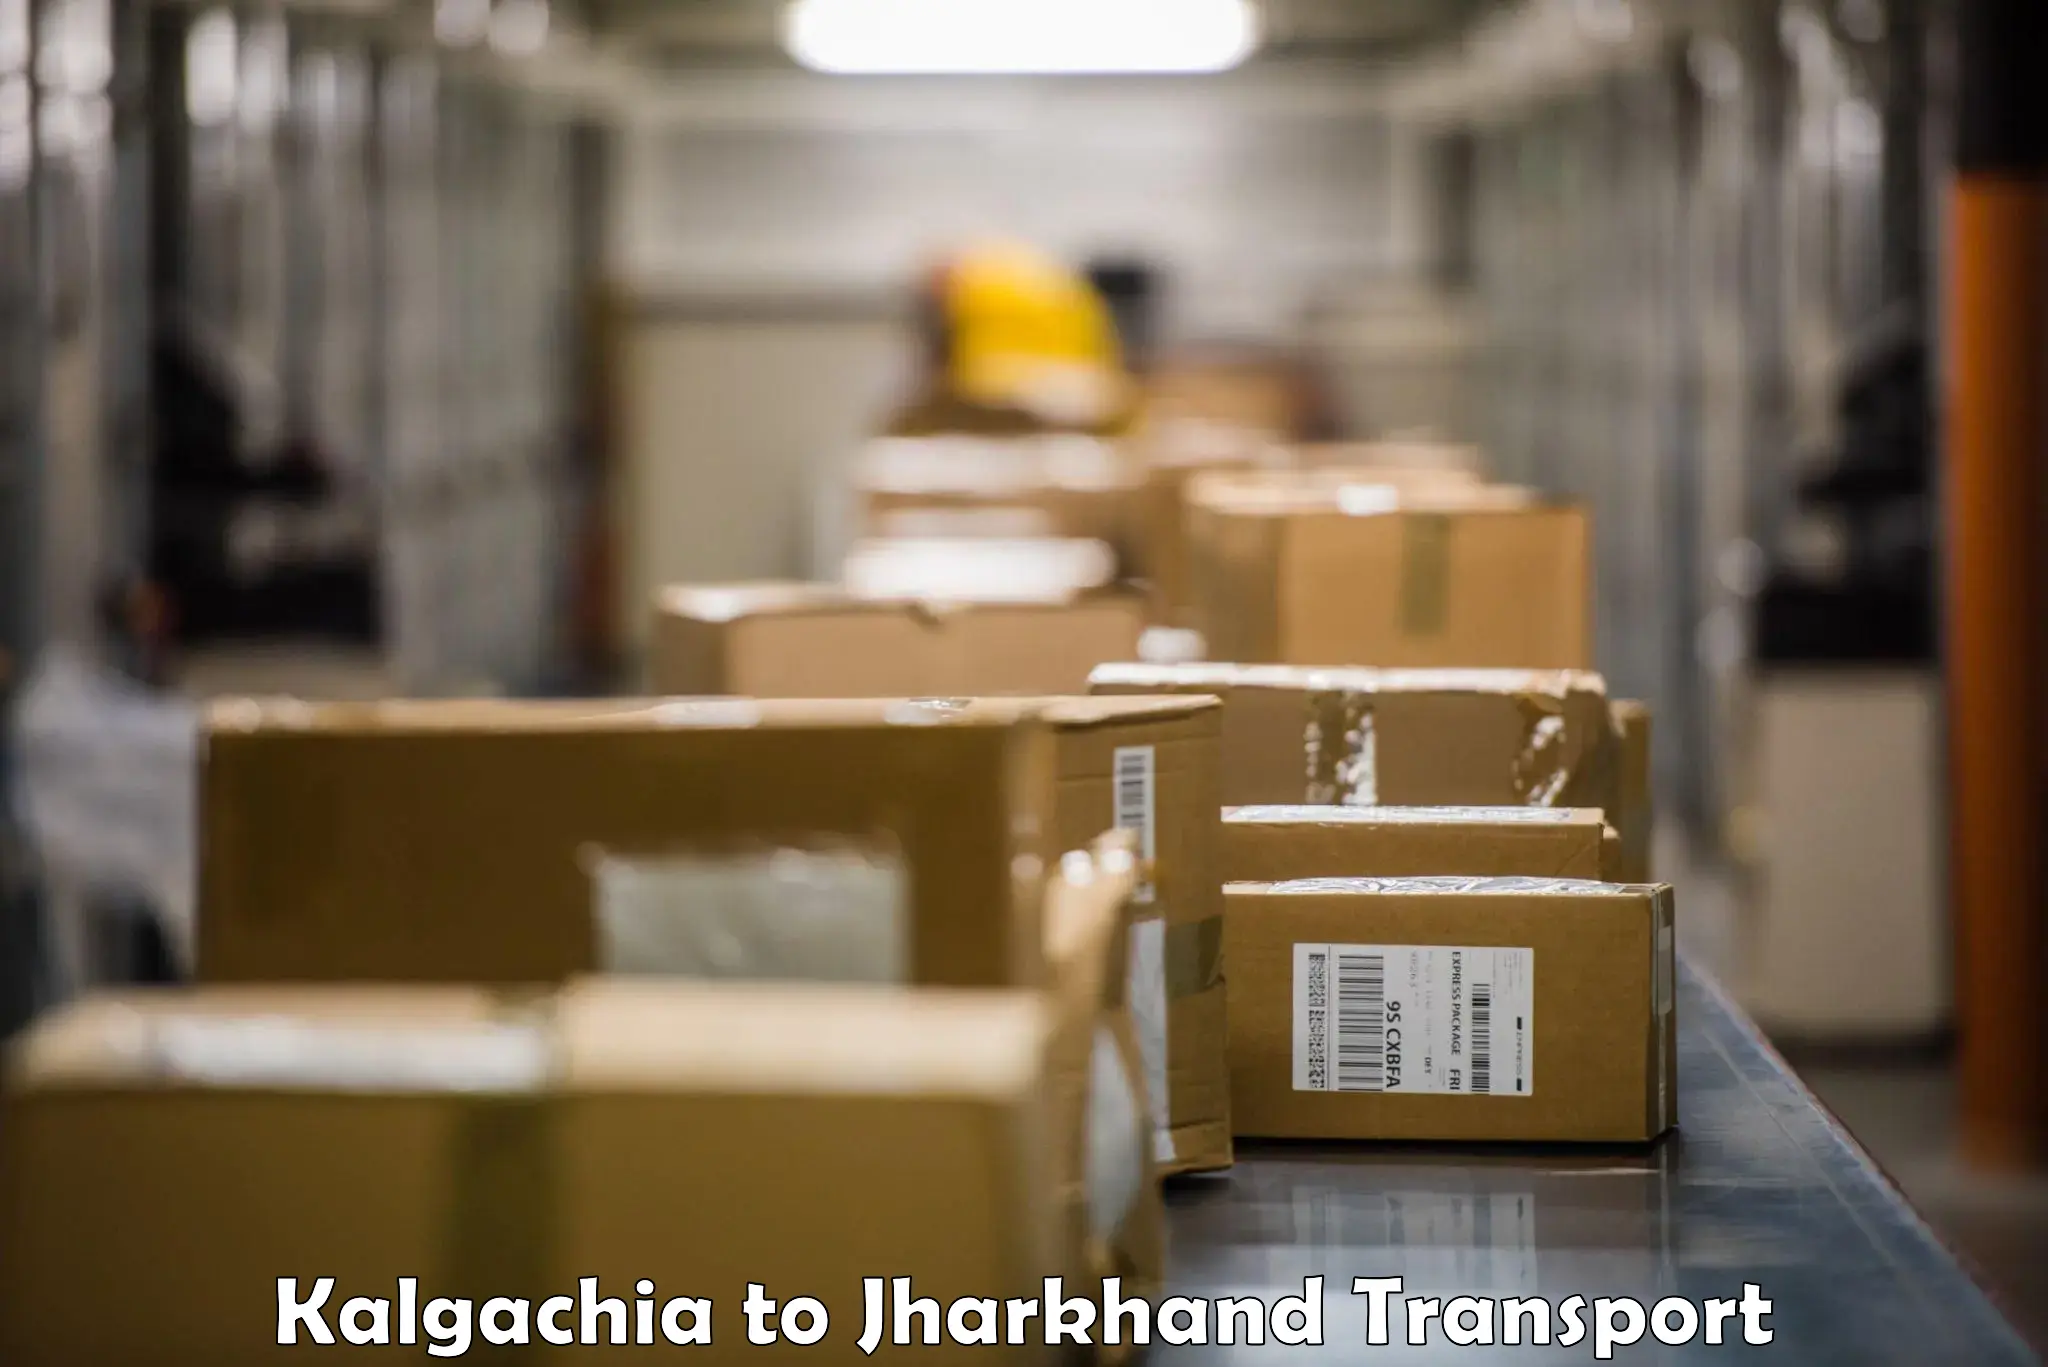 Container transport service in Kalgachia to Poreyahat